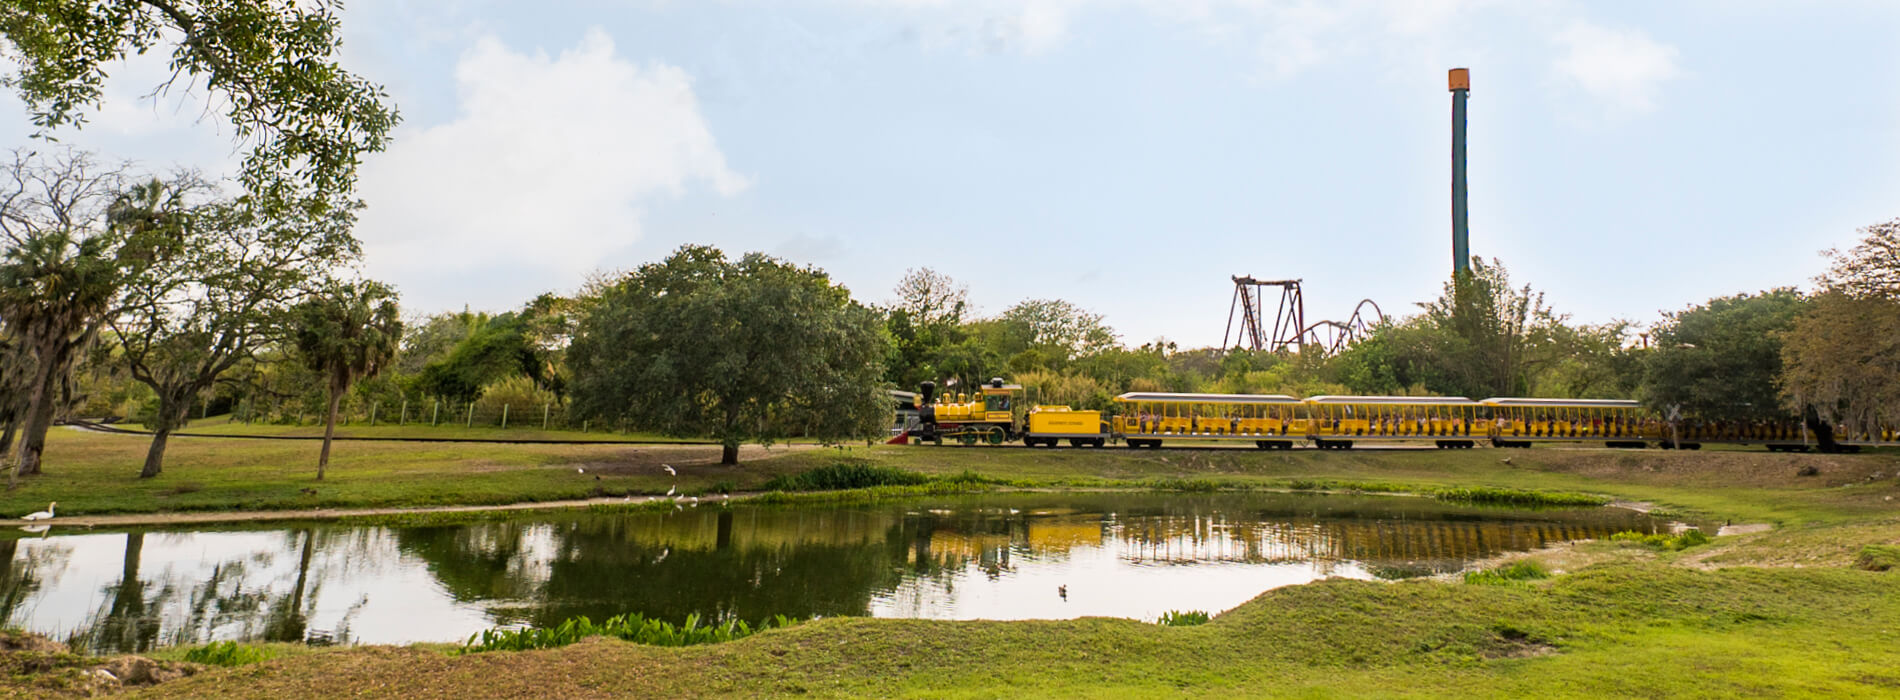 Ride the Serengeti Railway at Busch Gardens Tampa Bay